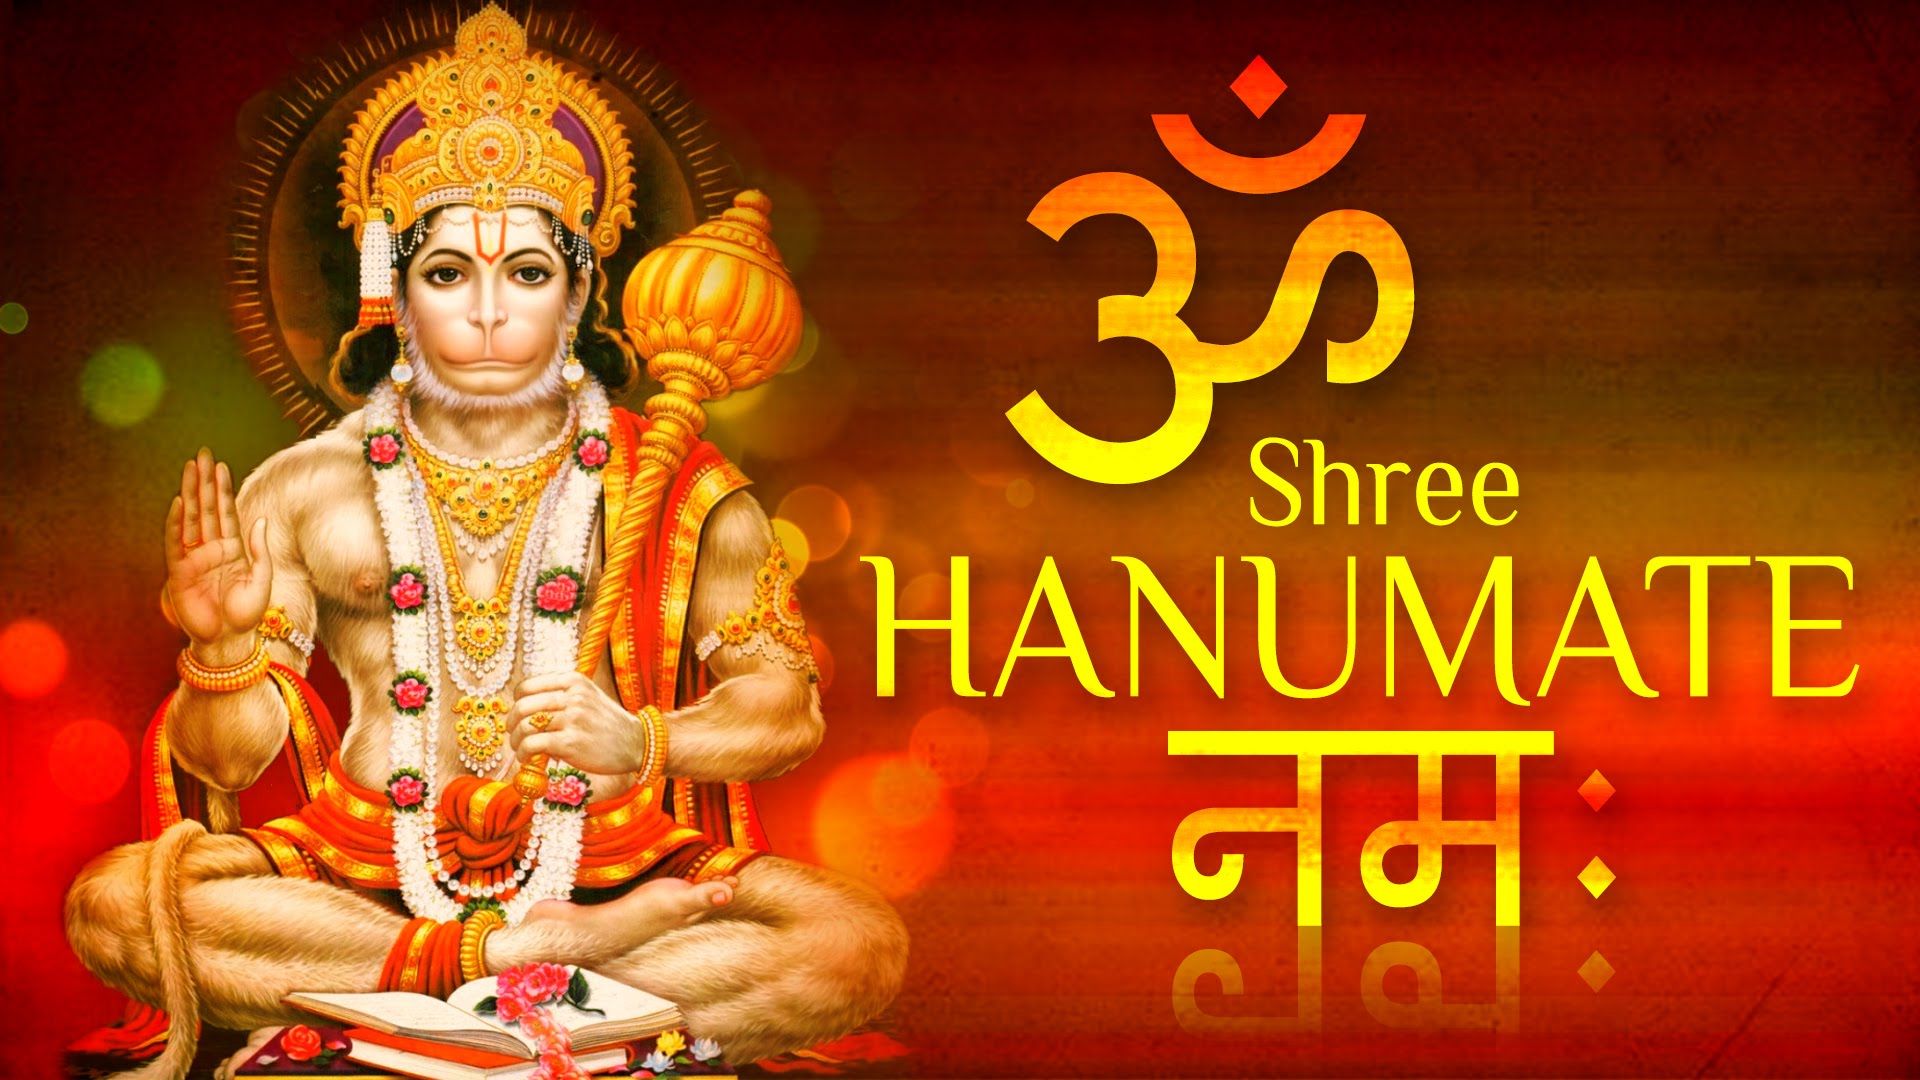 Hanuman Mantra In Hindi For Success